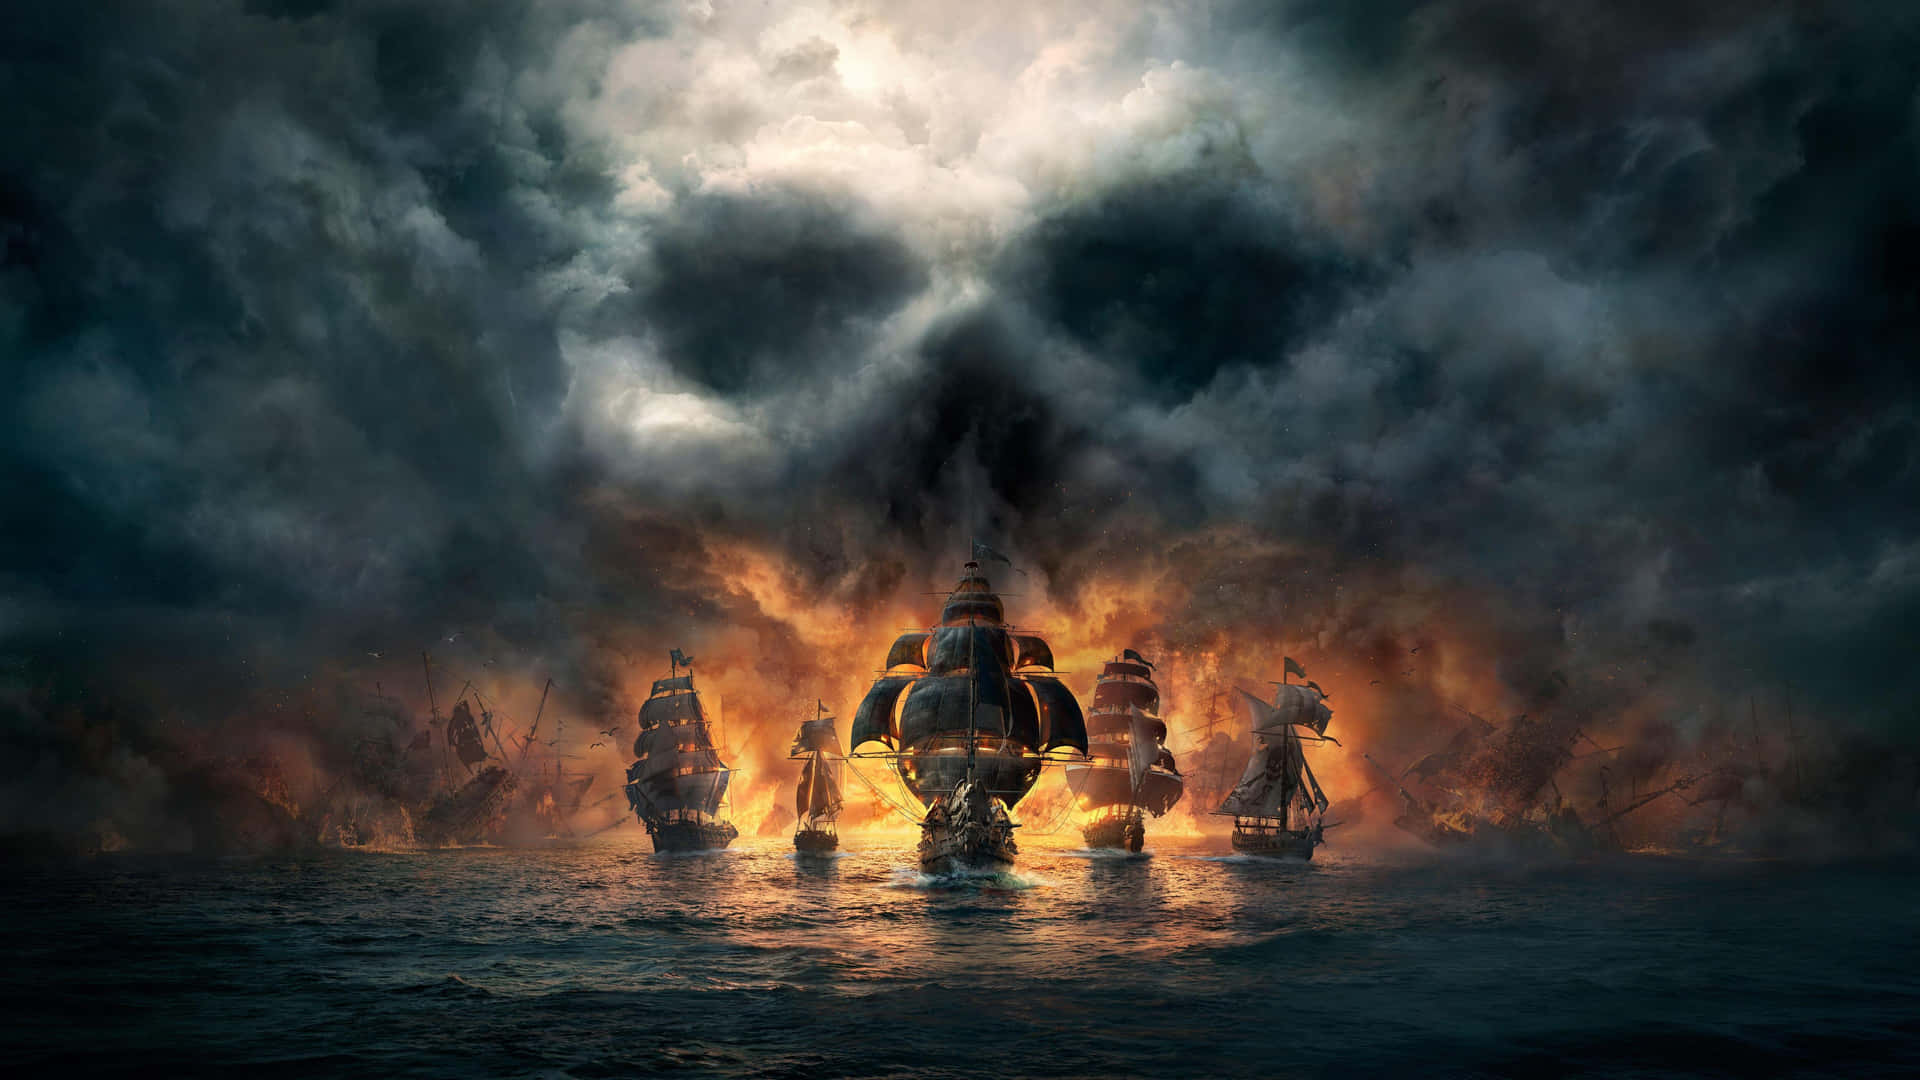 Epic_ Naval_ Battle_ At_ Sea Wallpaper